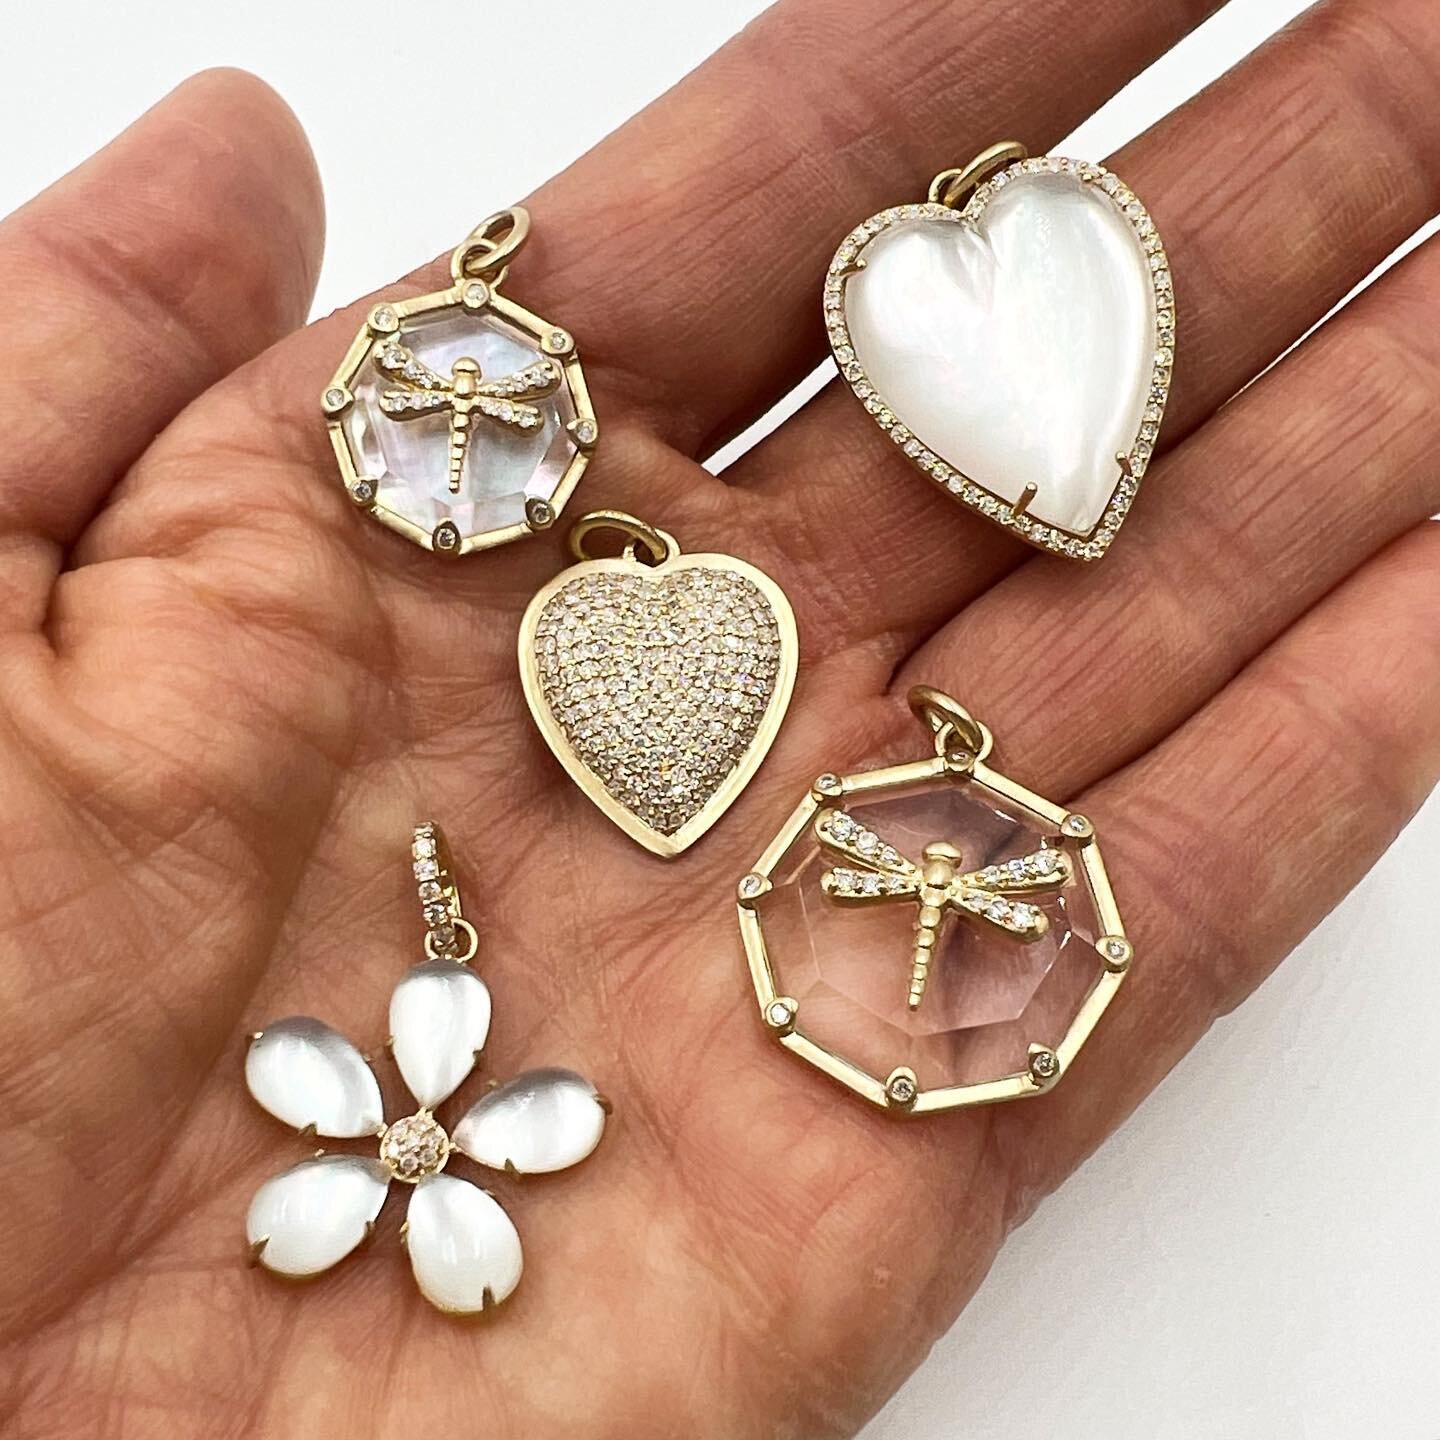 These are a few of my favorite things...
.
.
.
.
#charms #meaningfuljewelry #dragonfly #heartjewelry #diamonds #gold #goldjewelry #newjewelry #newyear #newyou #spiritualjewelry